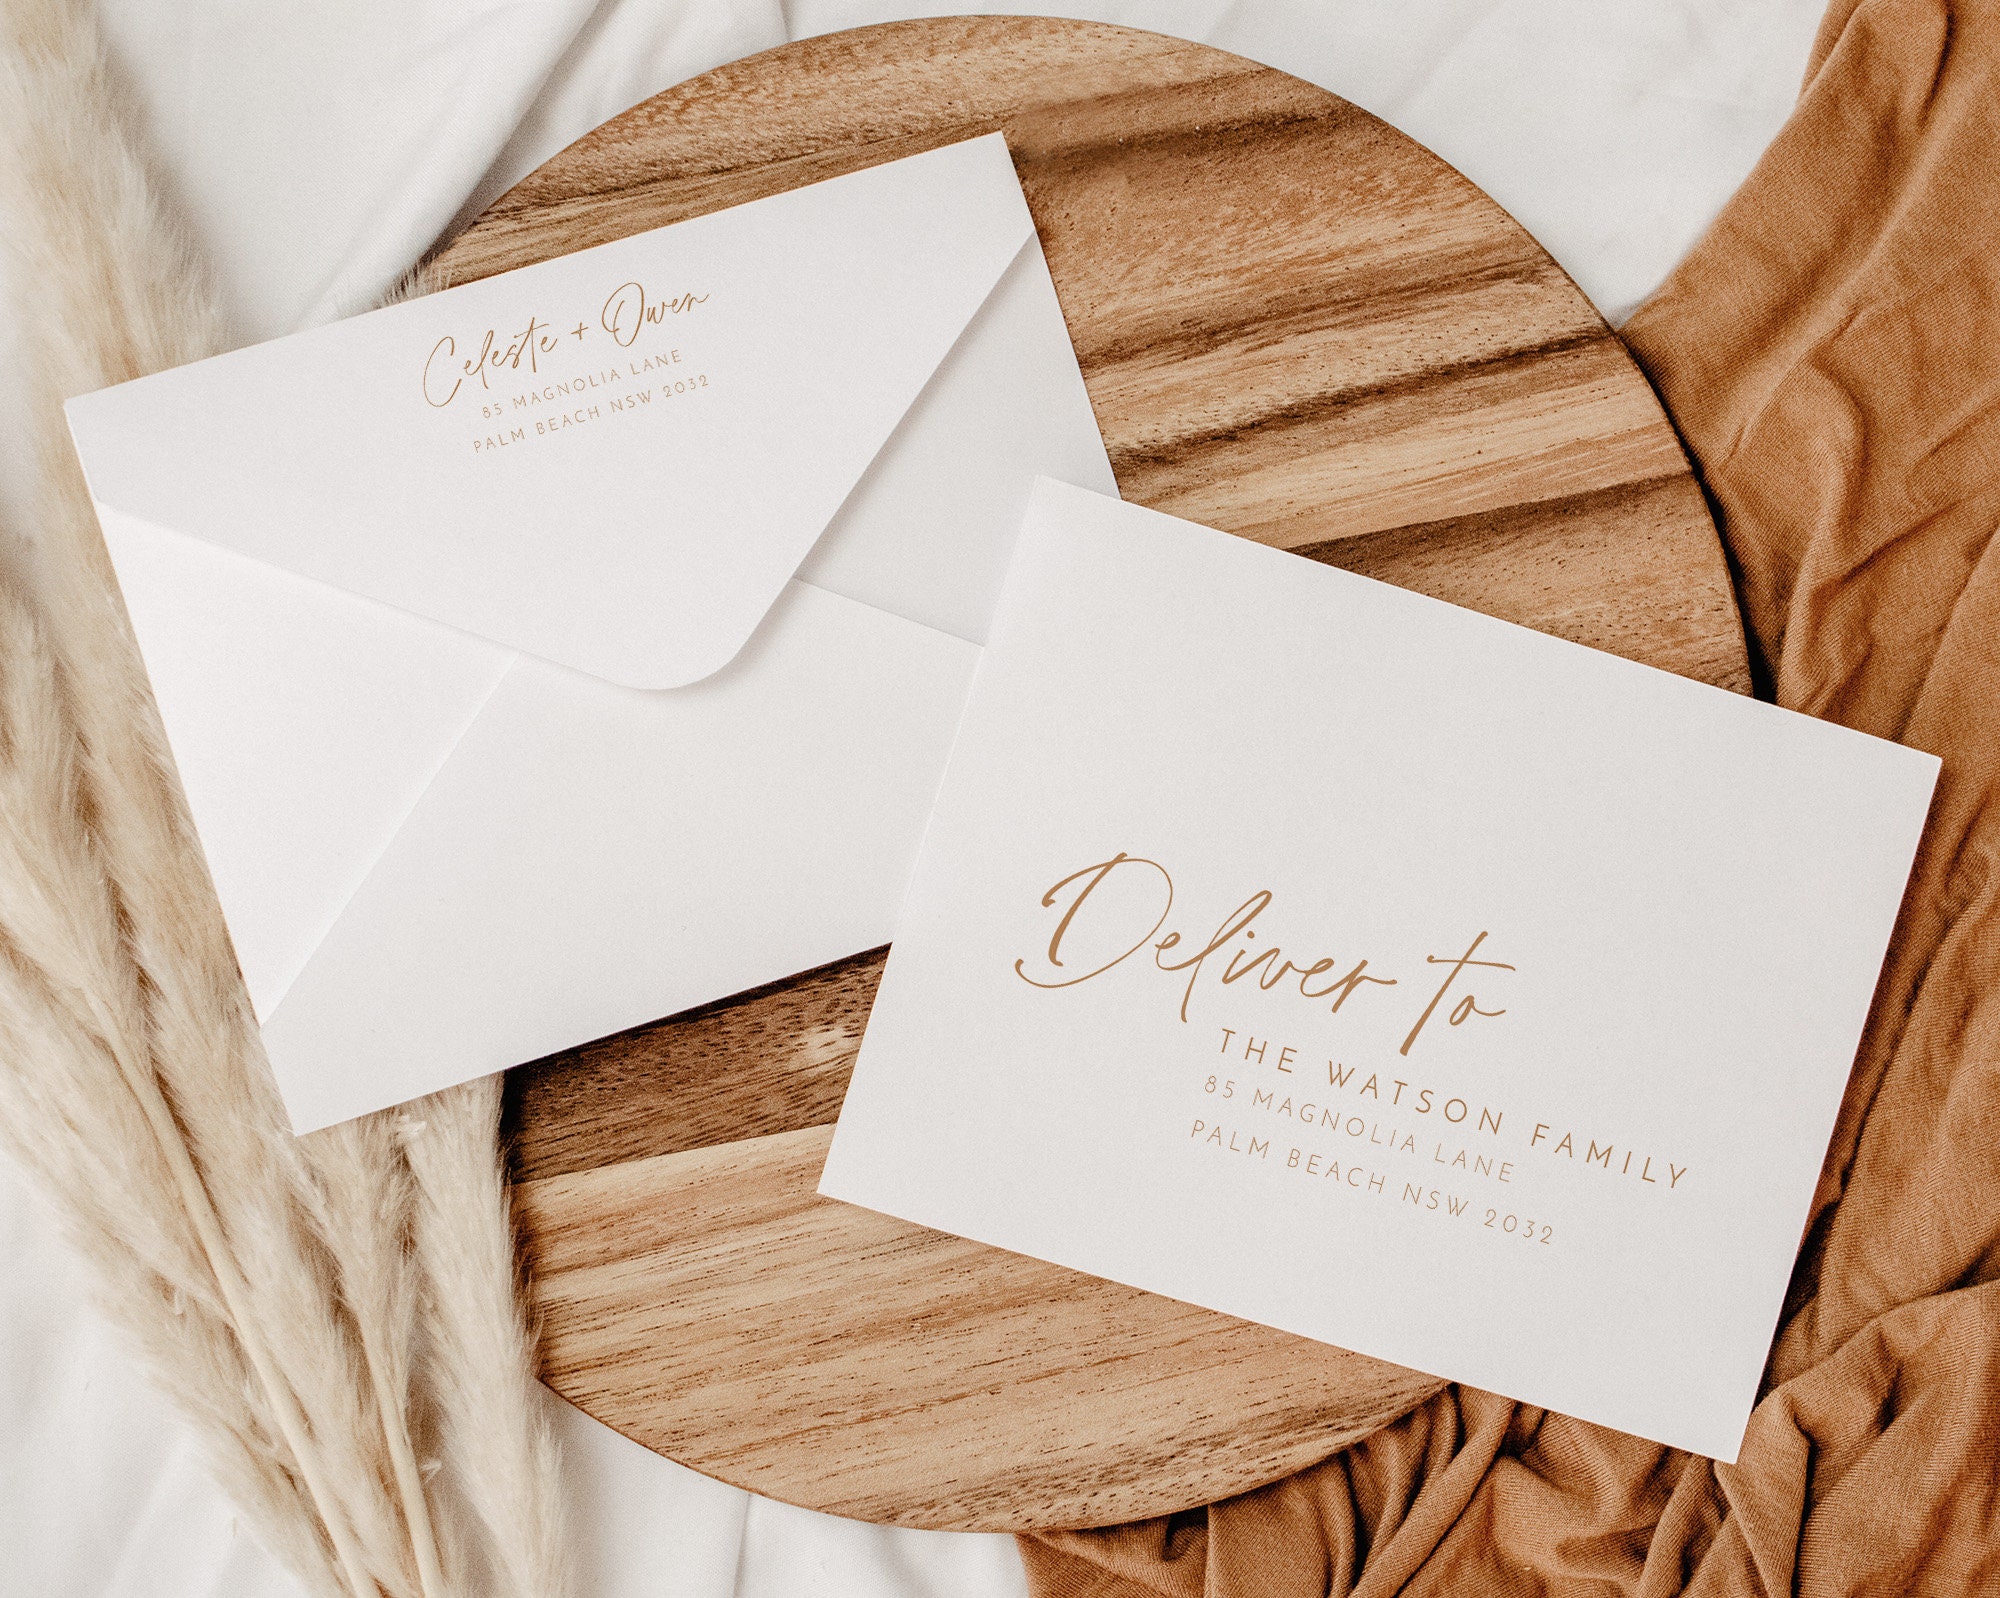 Printable Envelope Addressing Template. Magnolia Wedding -   Wedding  invitation envelopes, Wedding invitations, Printable wedding envelopes